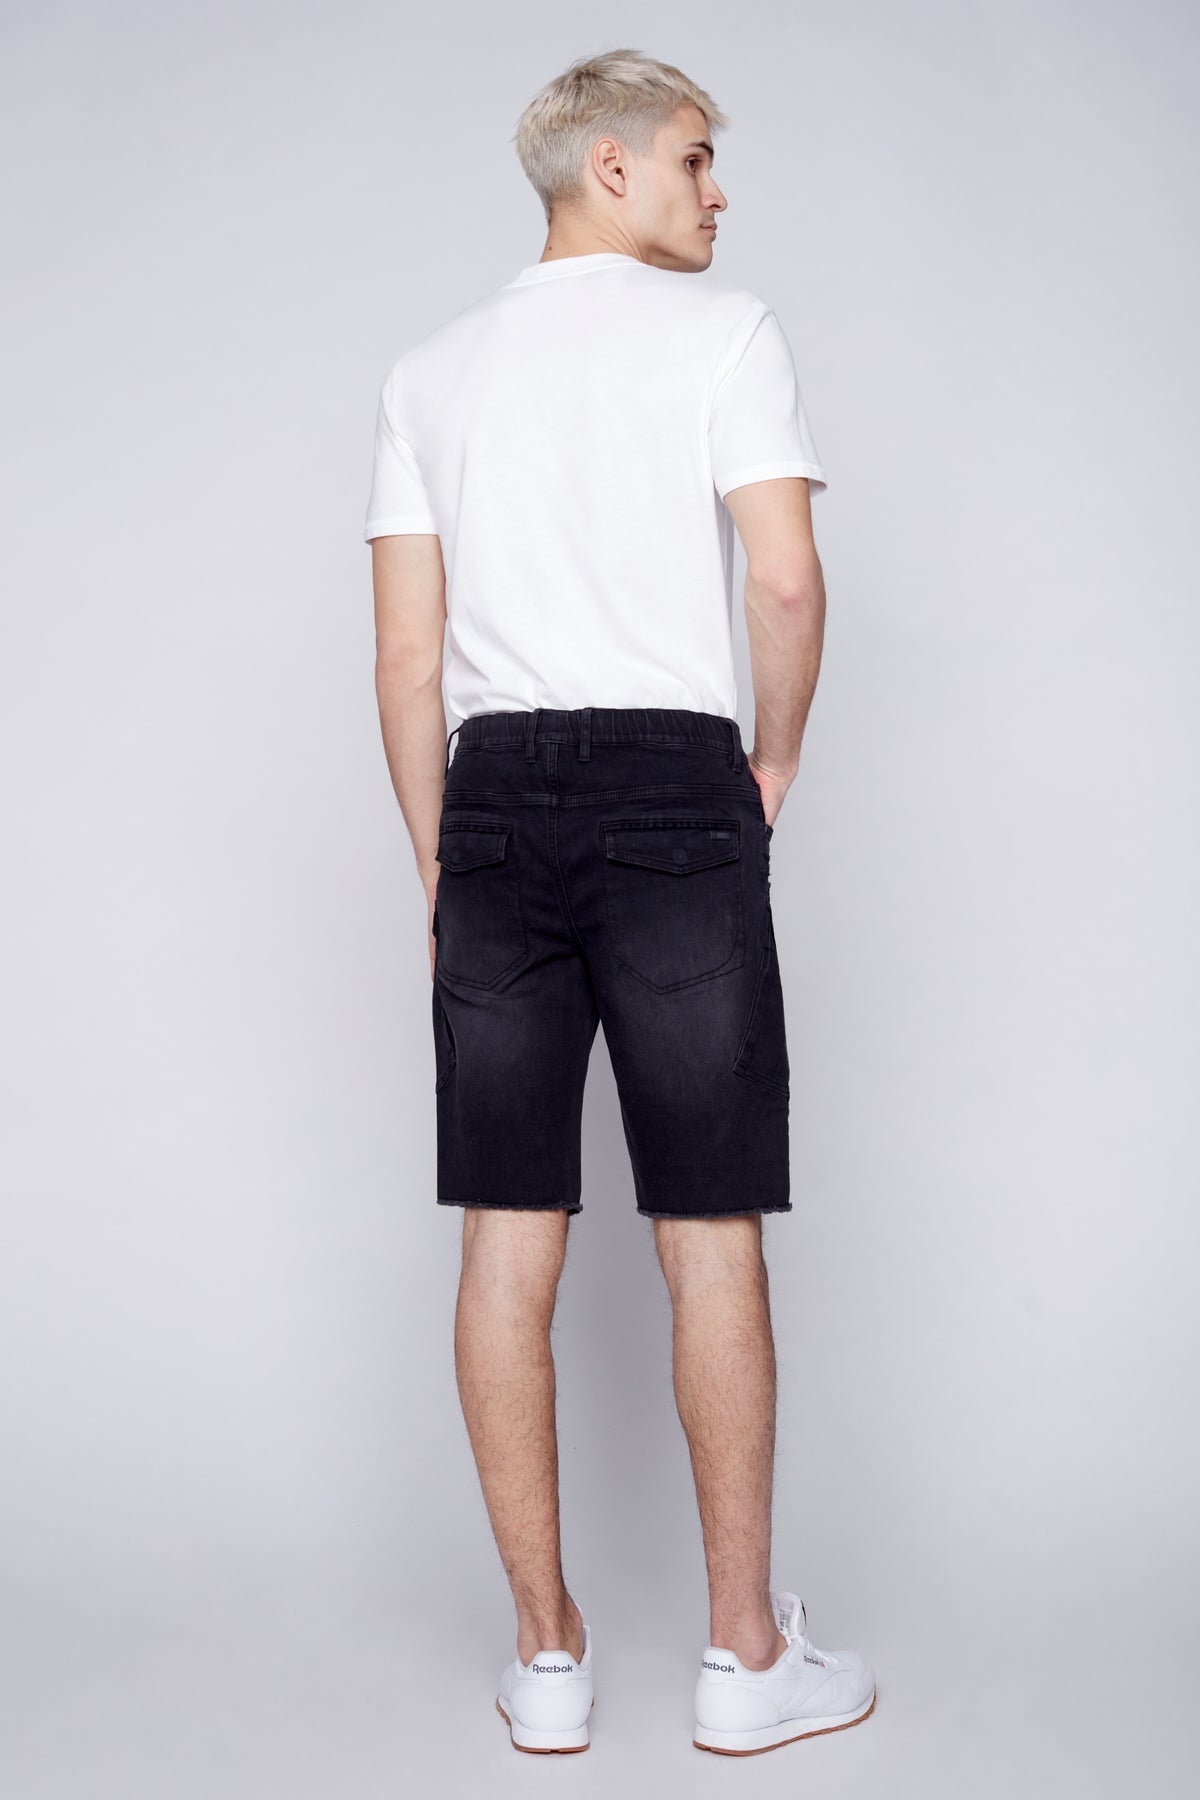 KRAVITZ - Mens Shorts With bellowed Cargo pockets - Vintage Black